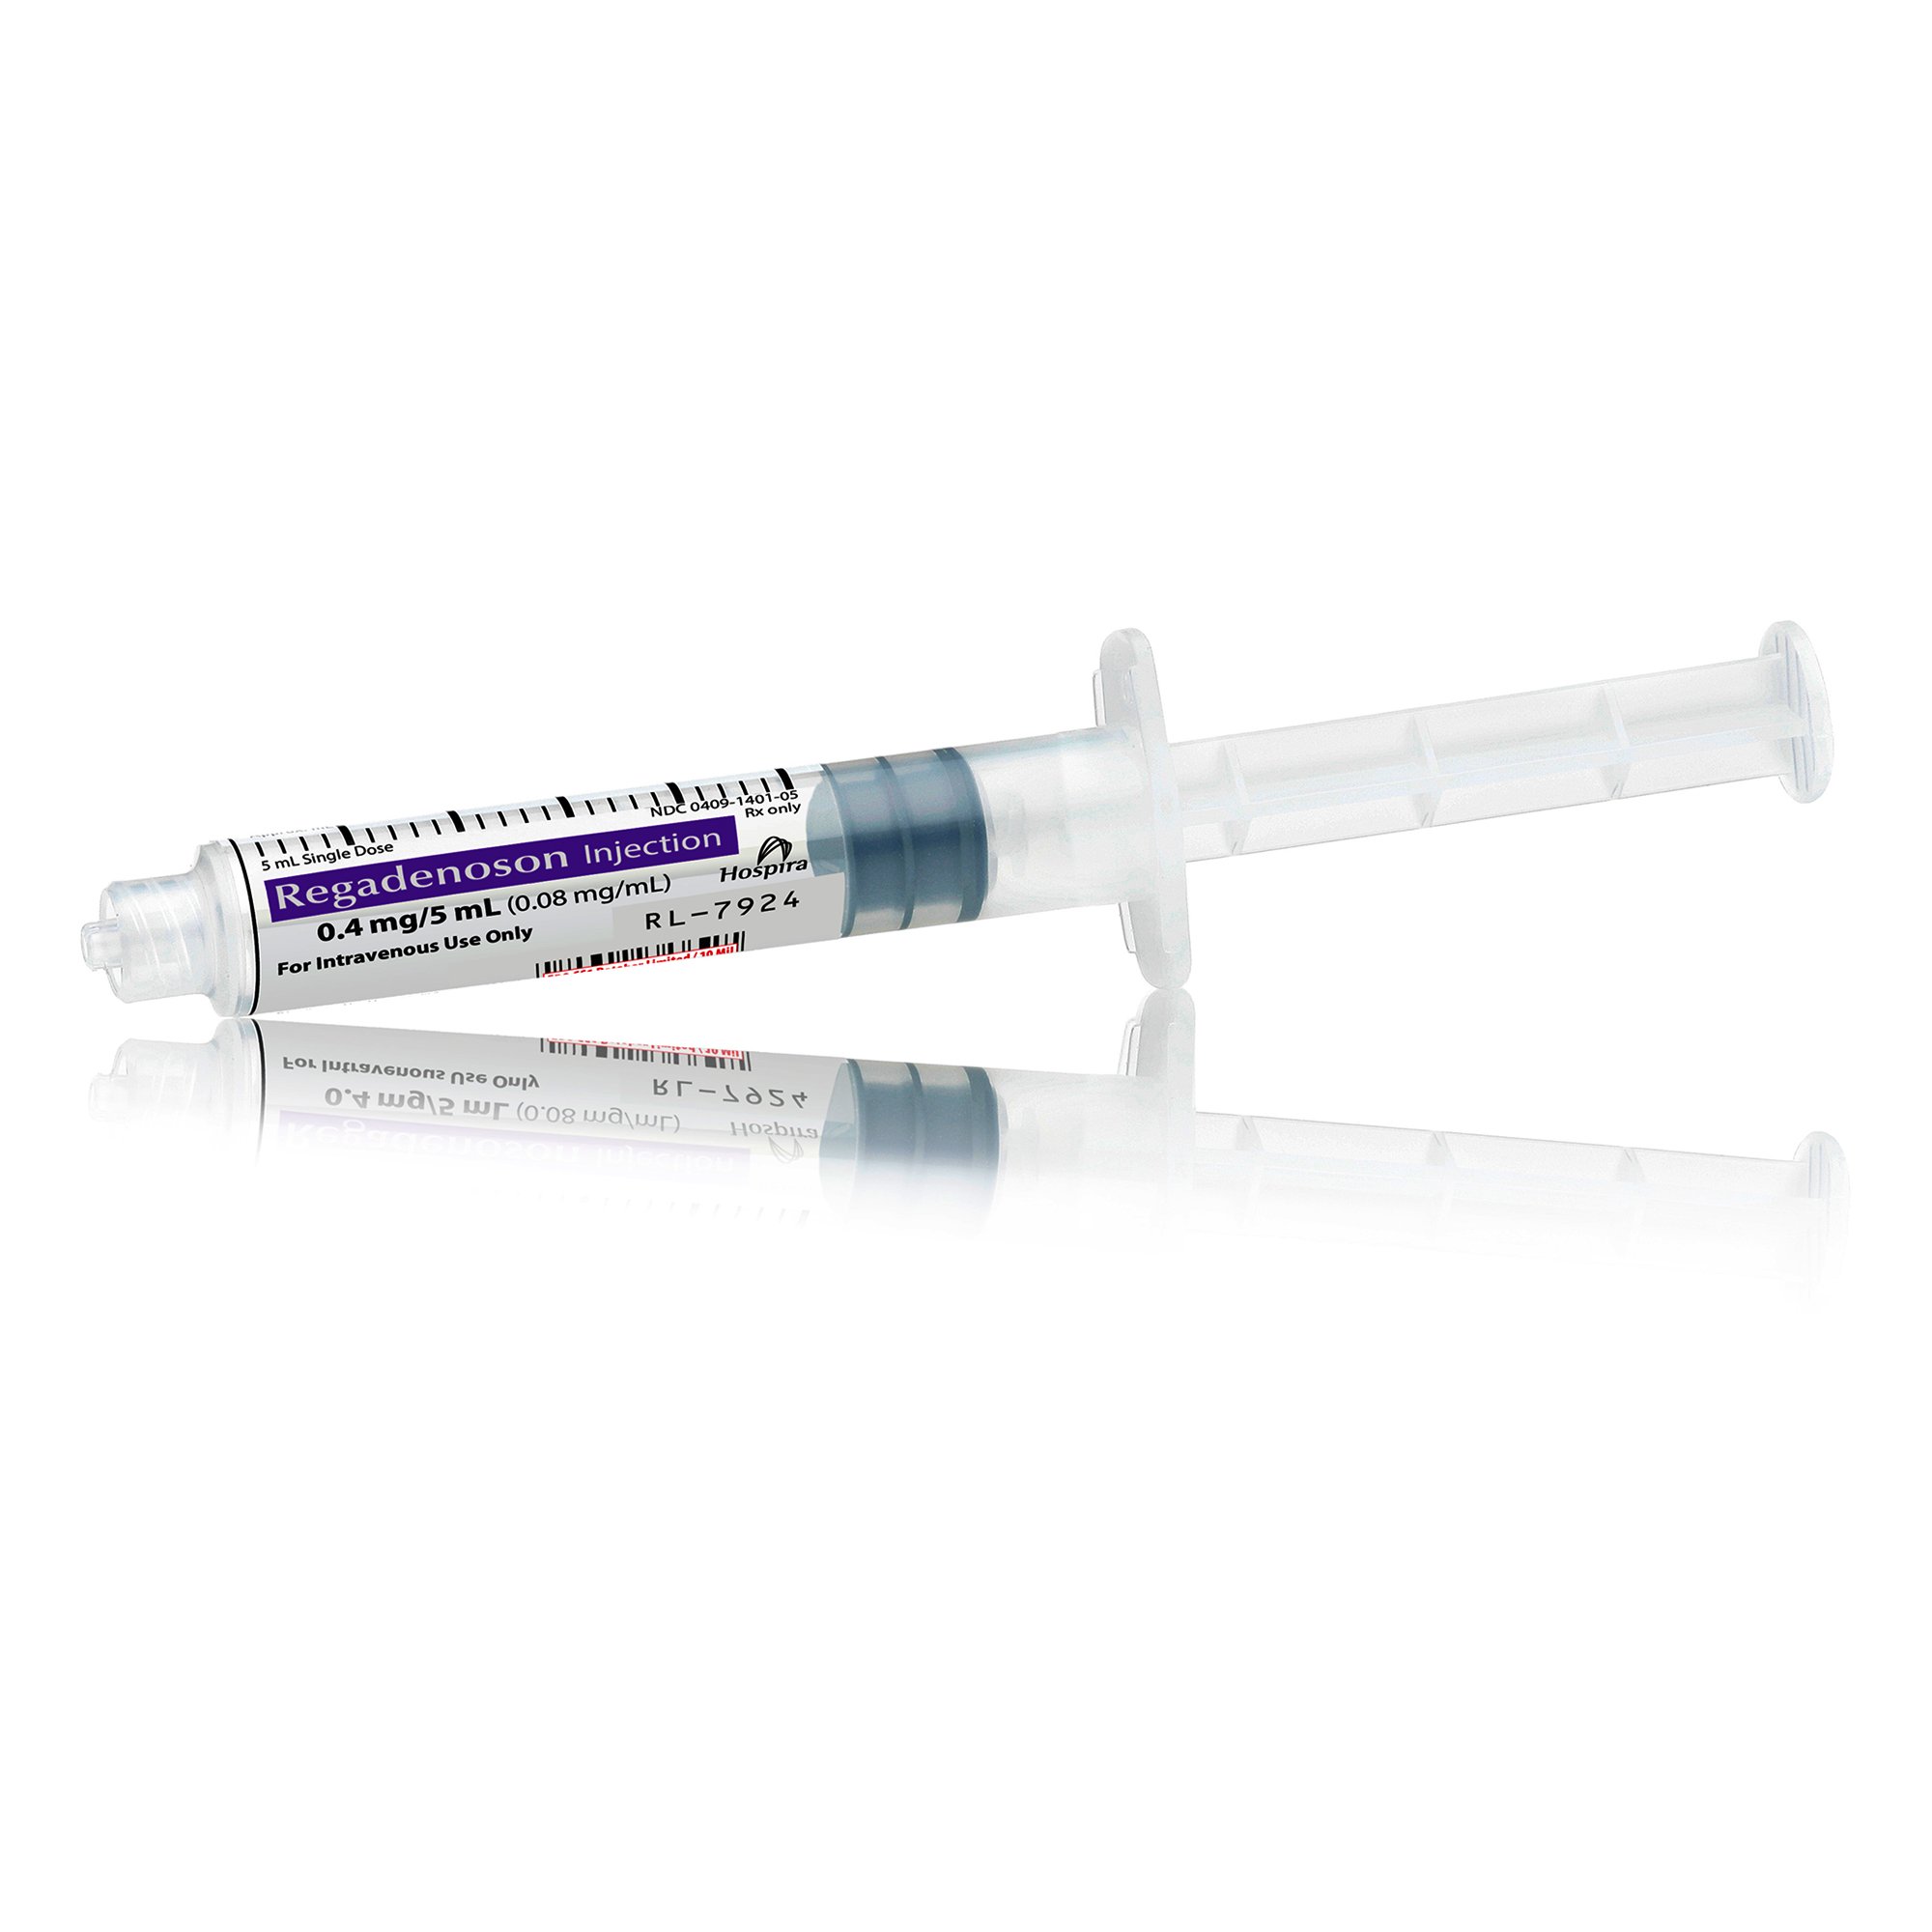 Regadenoson 0.08 mg / mL Injection Prefilled Syringe 5 mL 10 Per Box